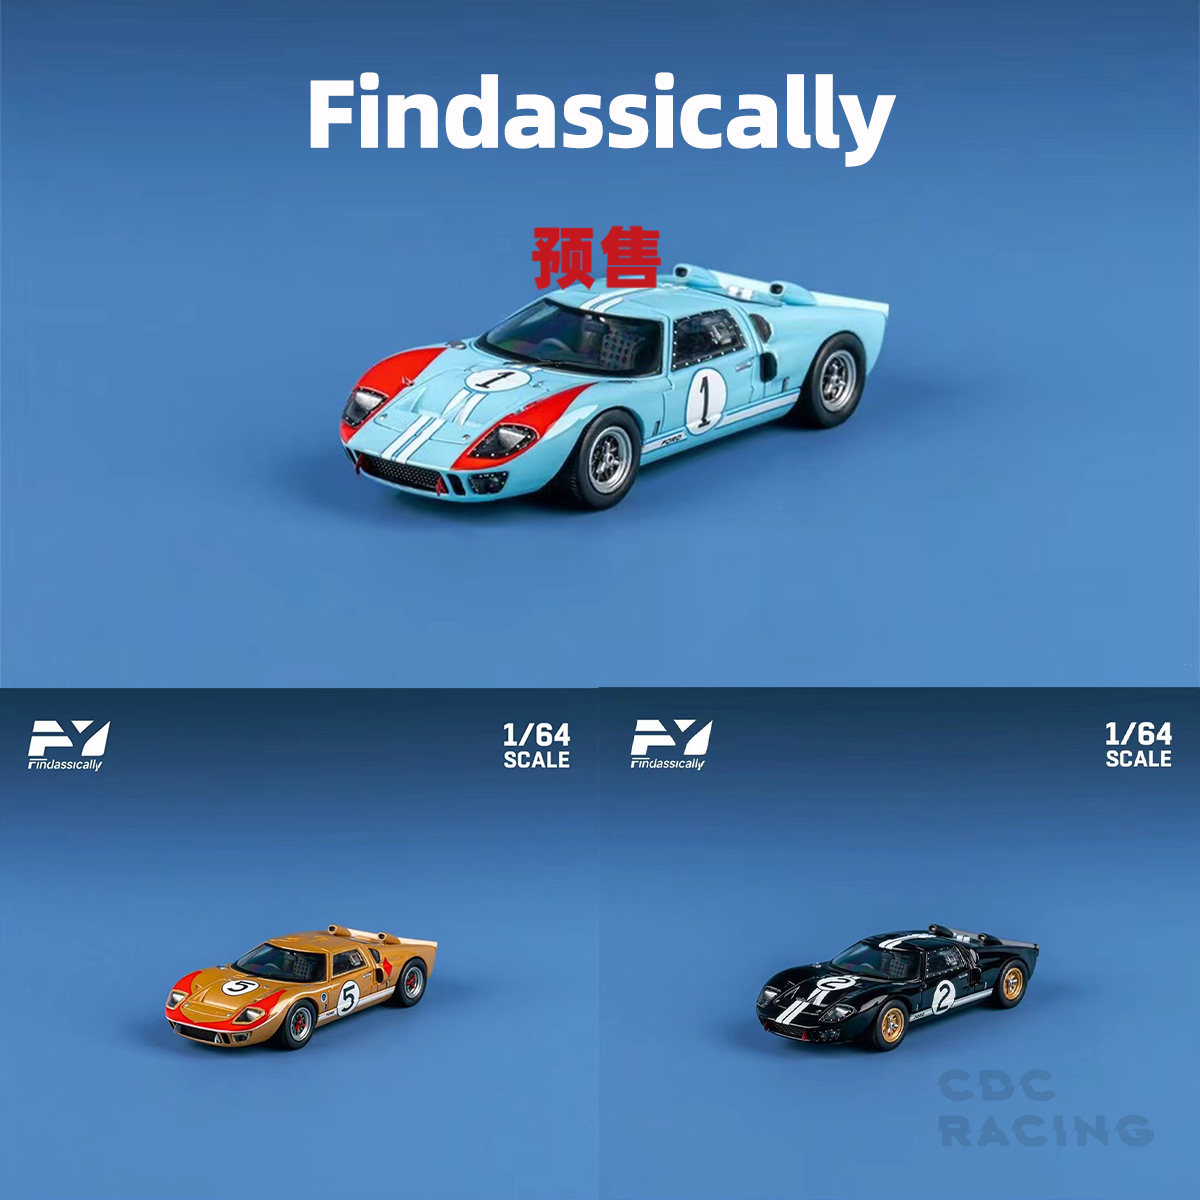 Findclassically FY 福特 Ford 赛车 GT40 Mk II 2 合金 1:64